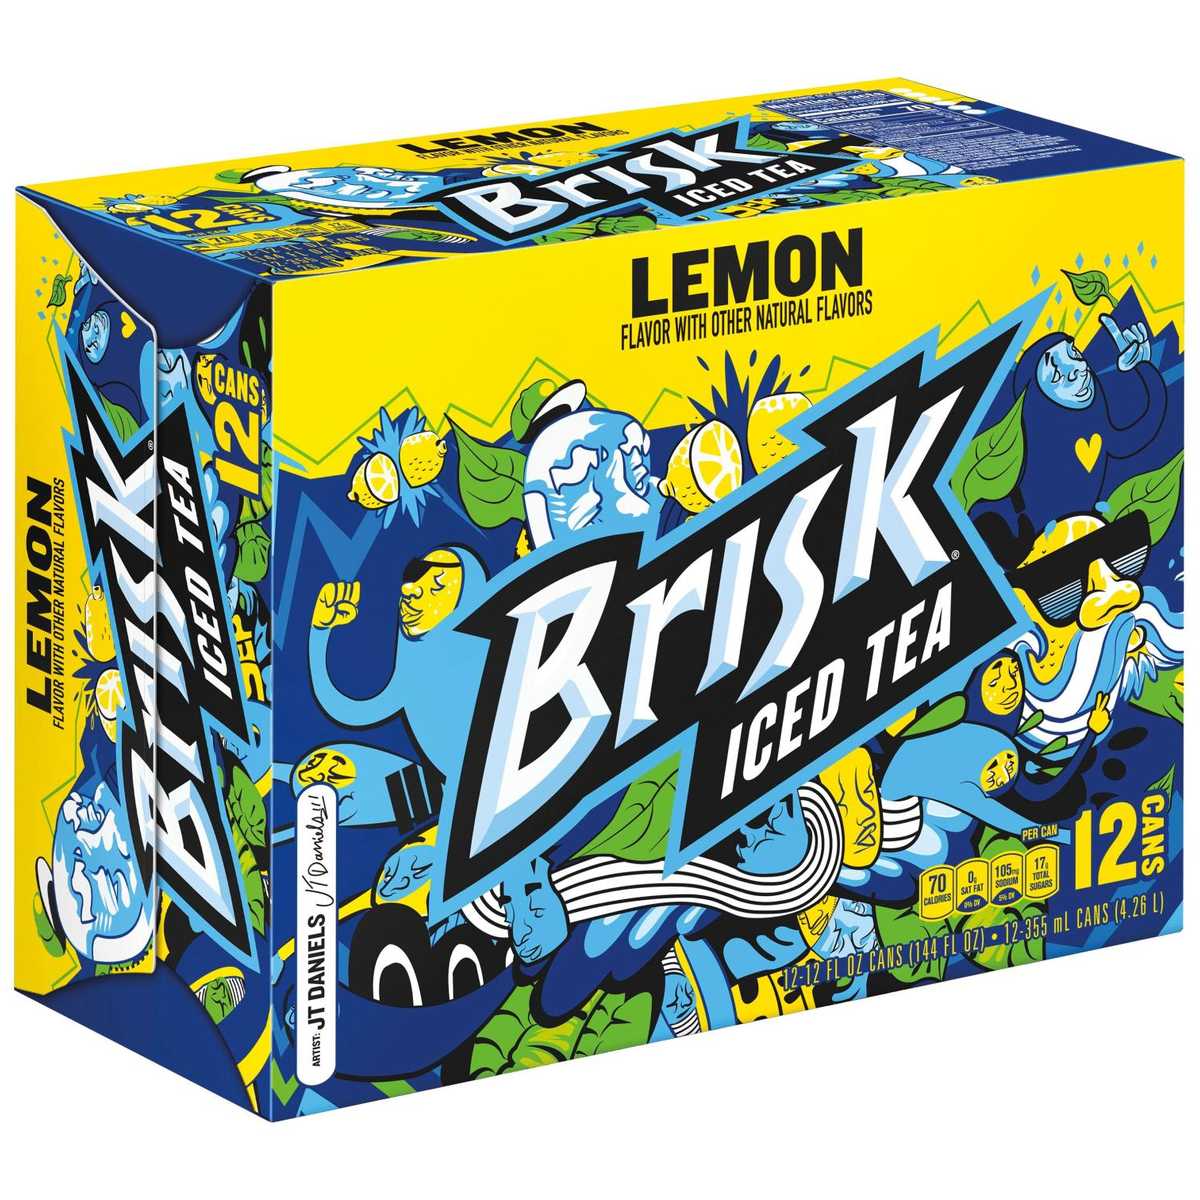 Brisk Iced Tea, Lemon, 12 fl oz, 36 ct